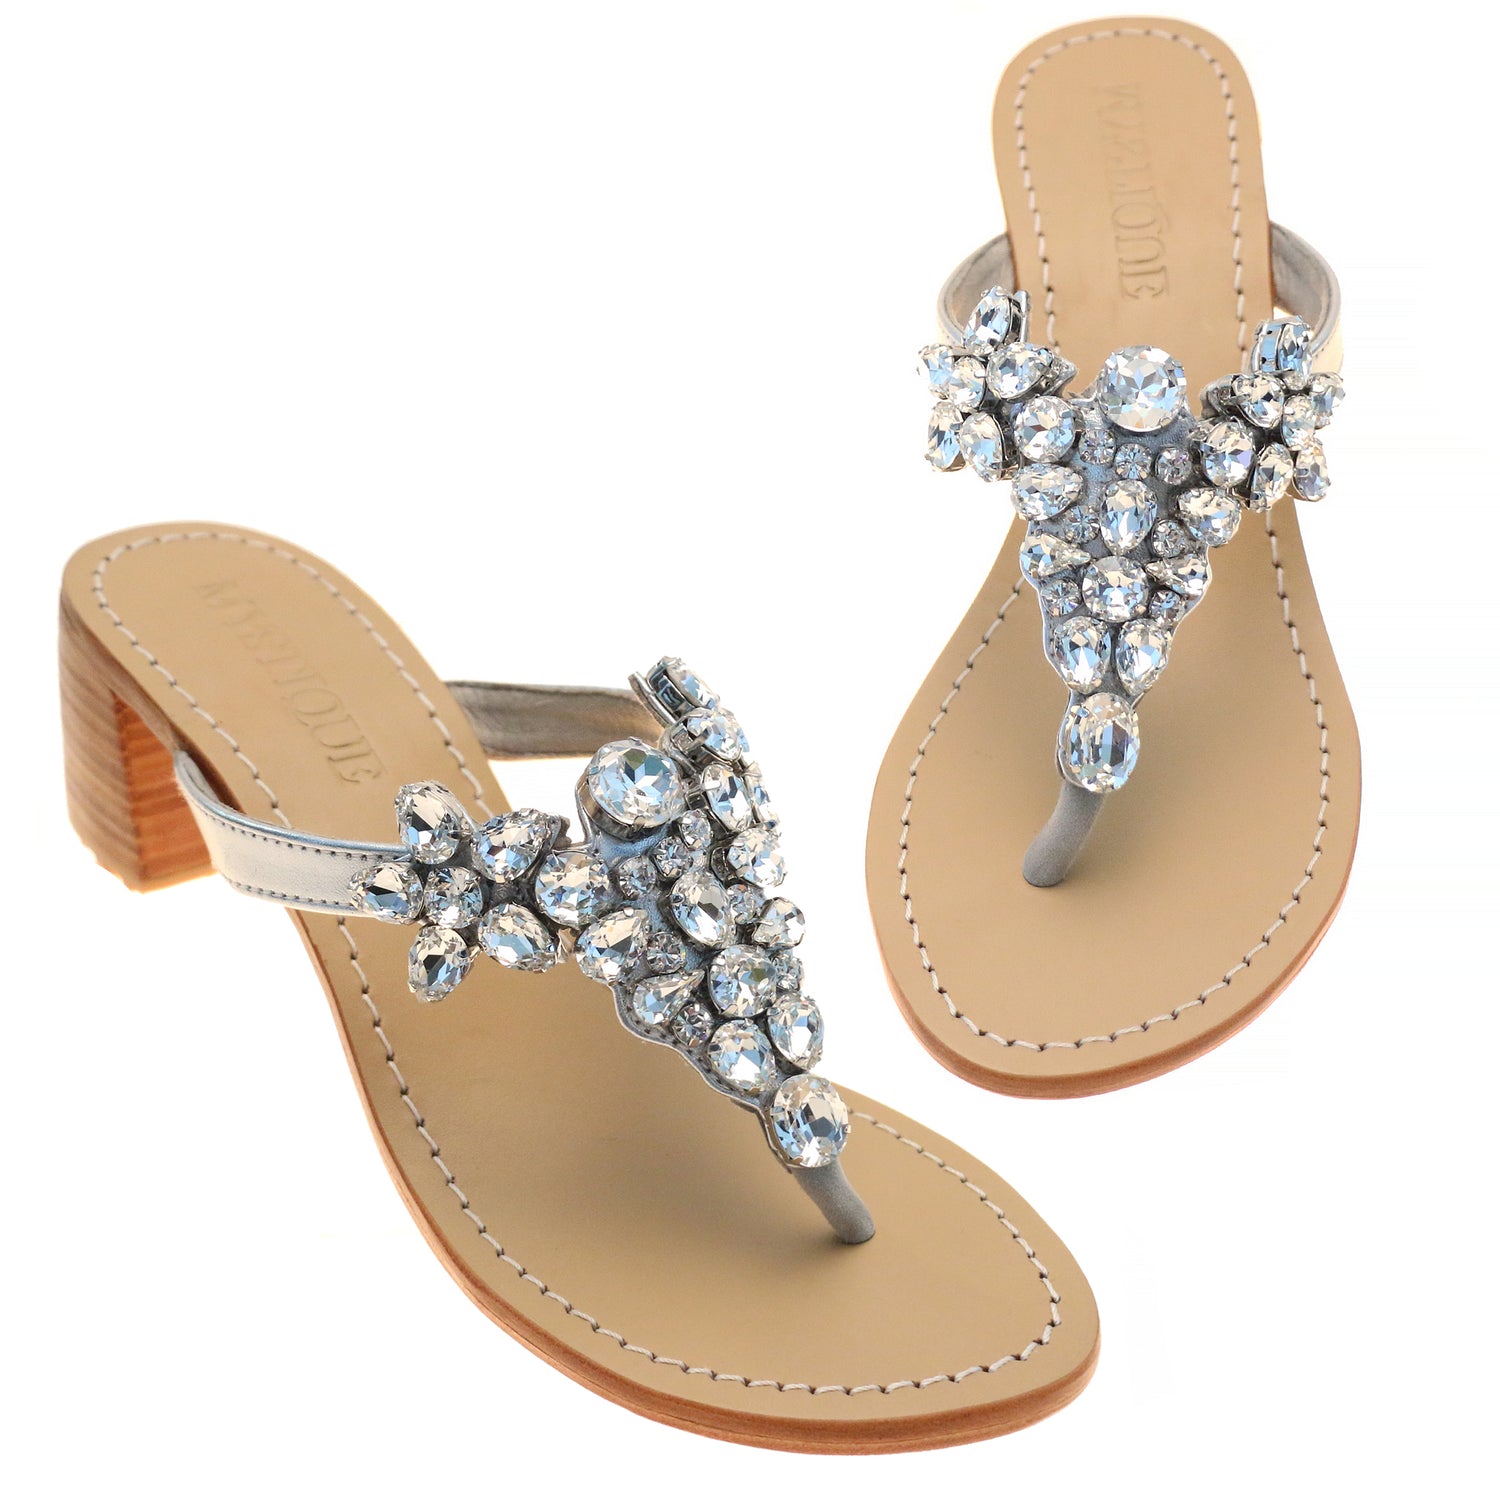 Dallas - Women's Silver Jeweled Heel Sandals | Mystique Sandals